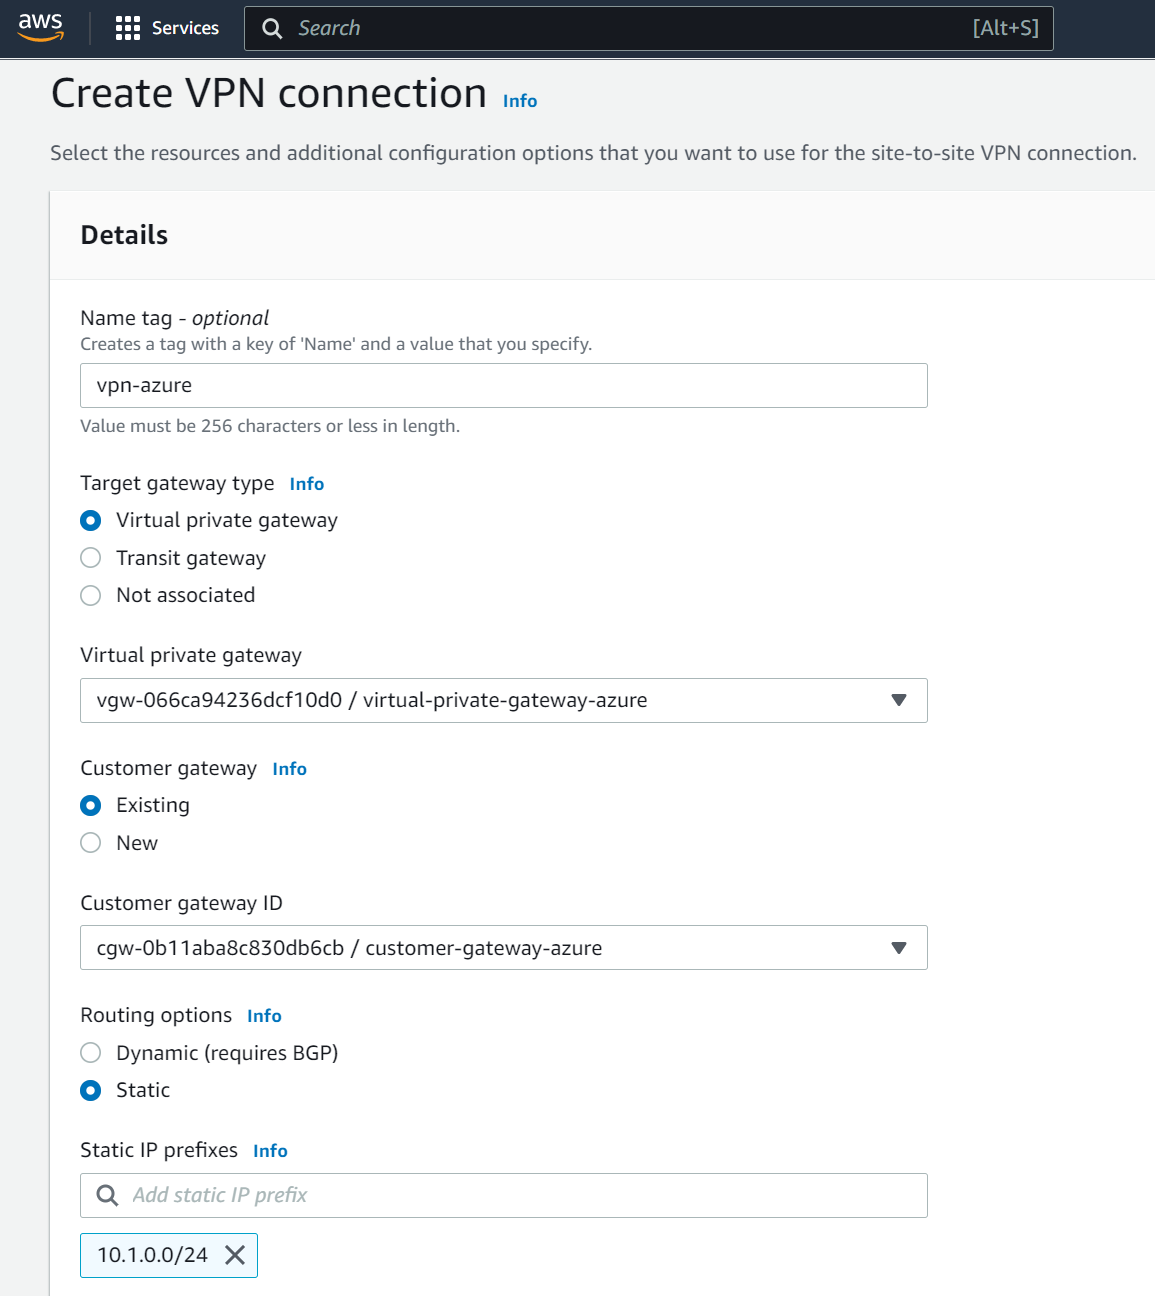 Create VPN connection